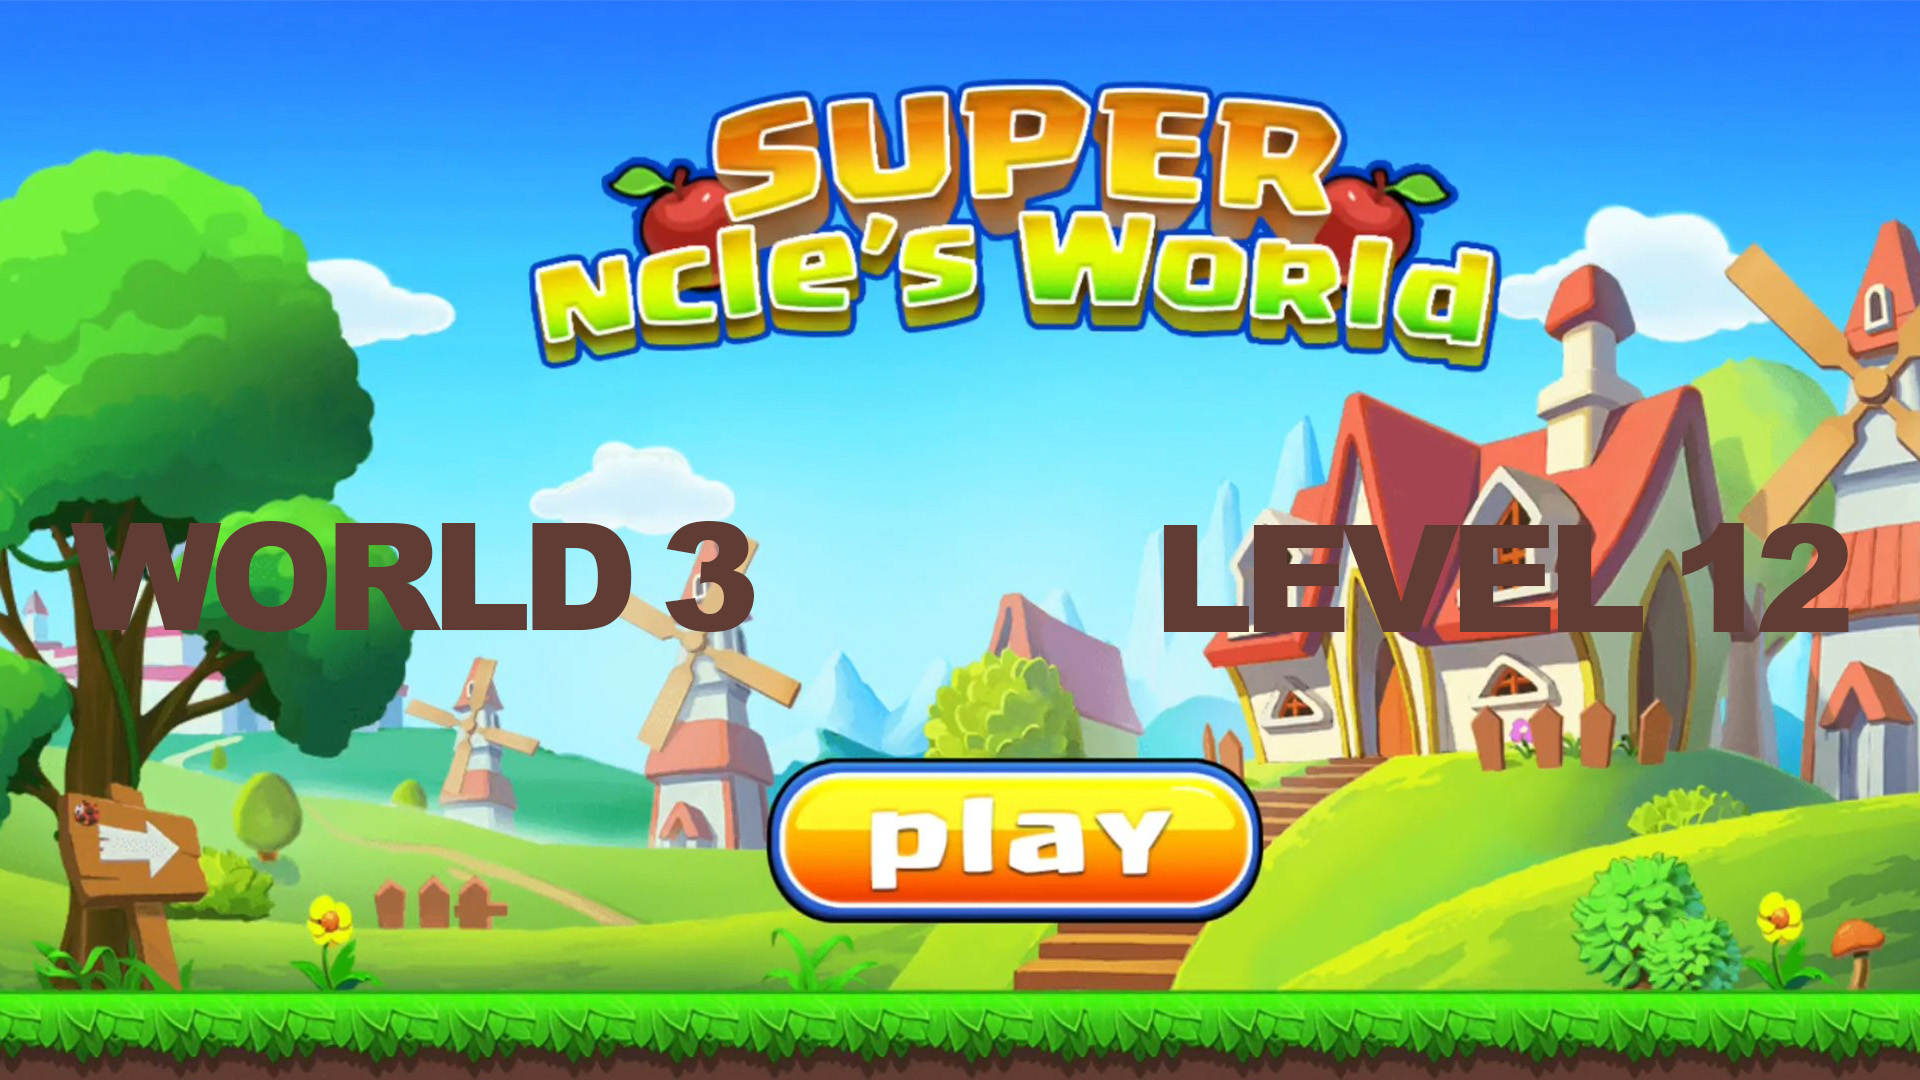 Super ncle's  World 3. Level 12.